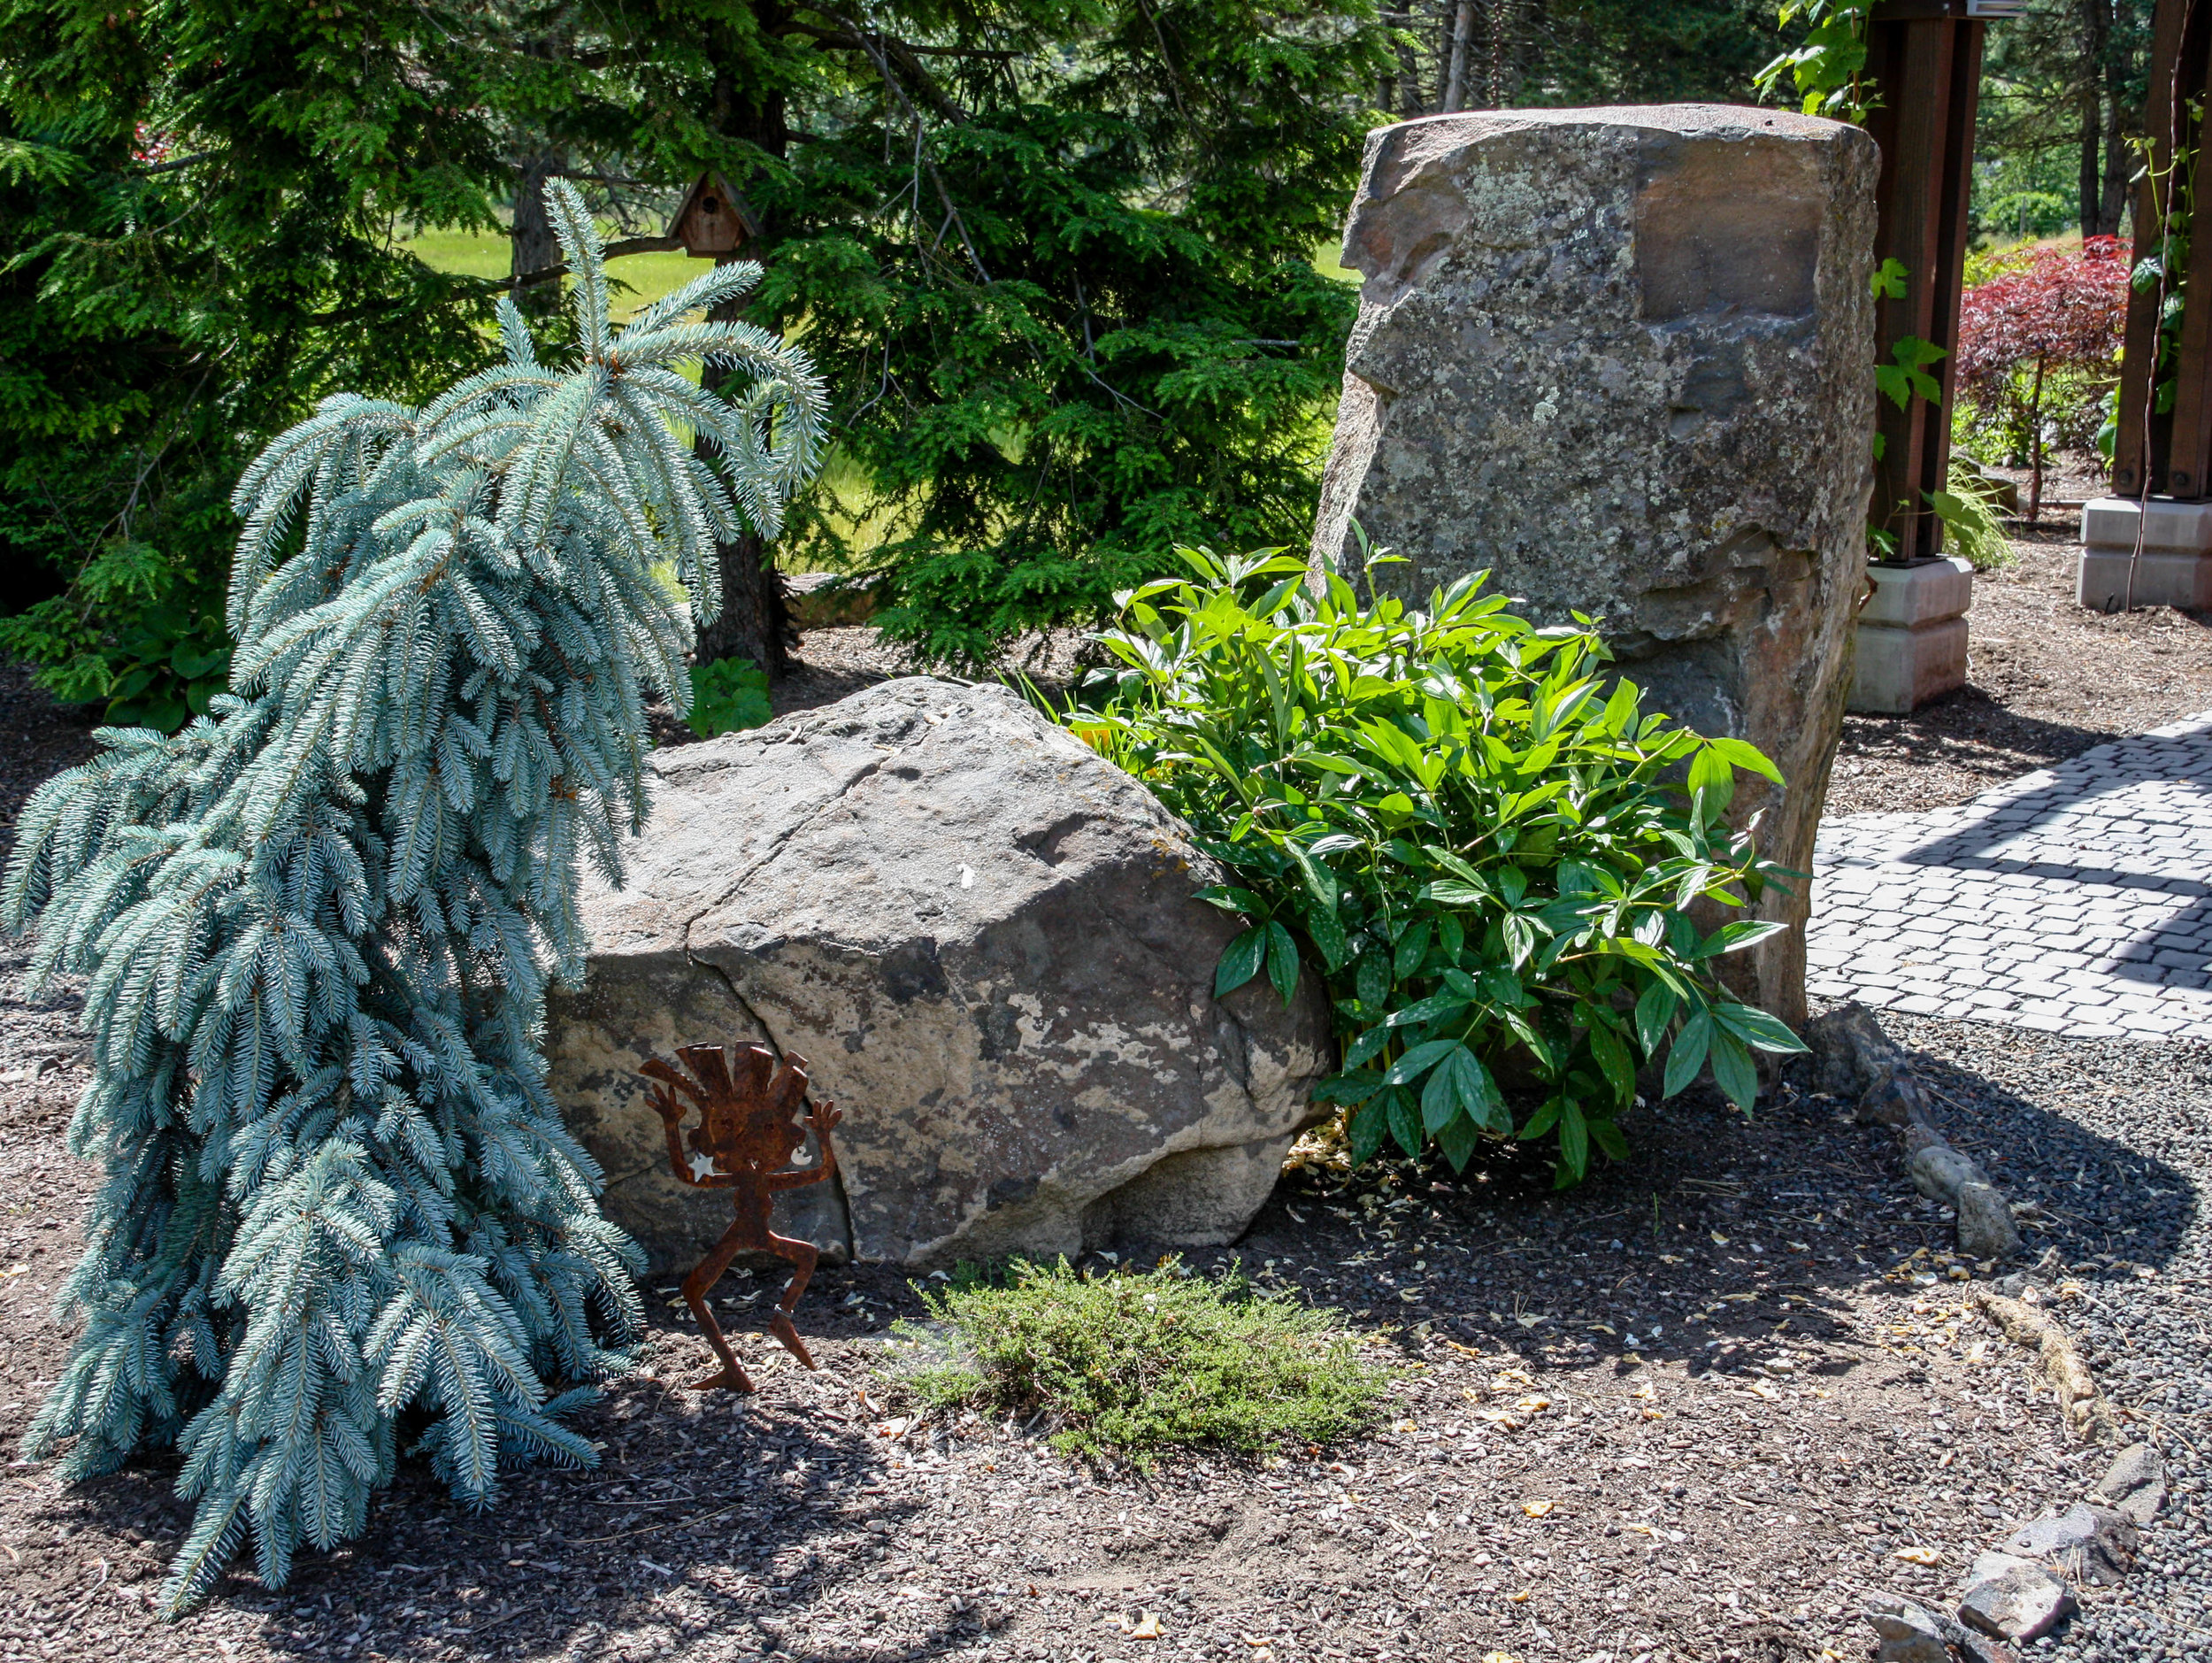 spokane northwest landscaping with boulders